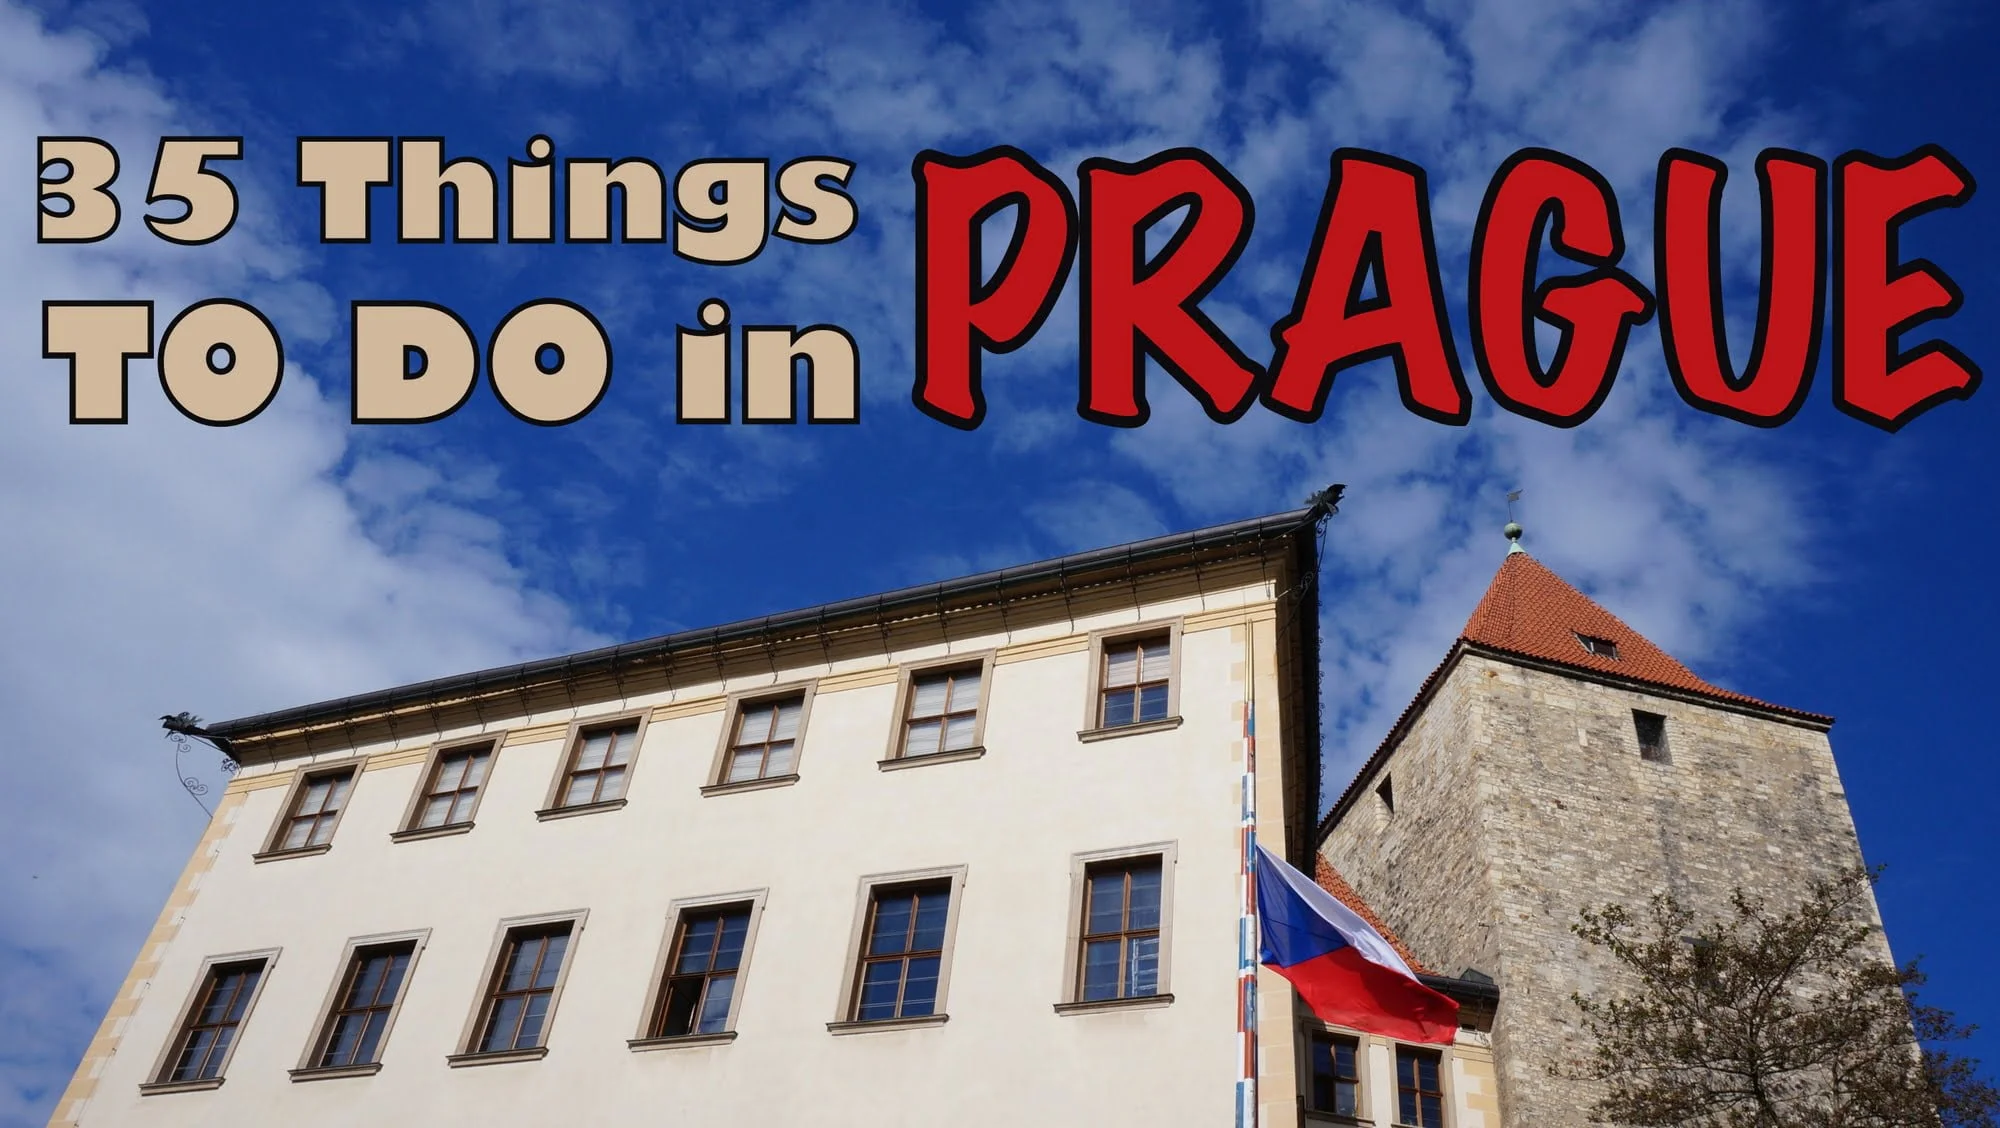 35 Things to Do in Prague, Czech Republic: Epic Summer Guide!